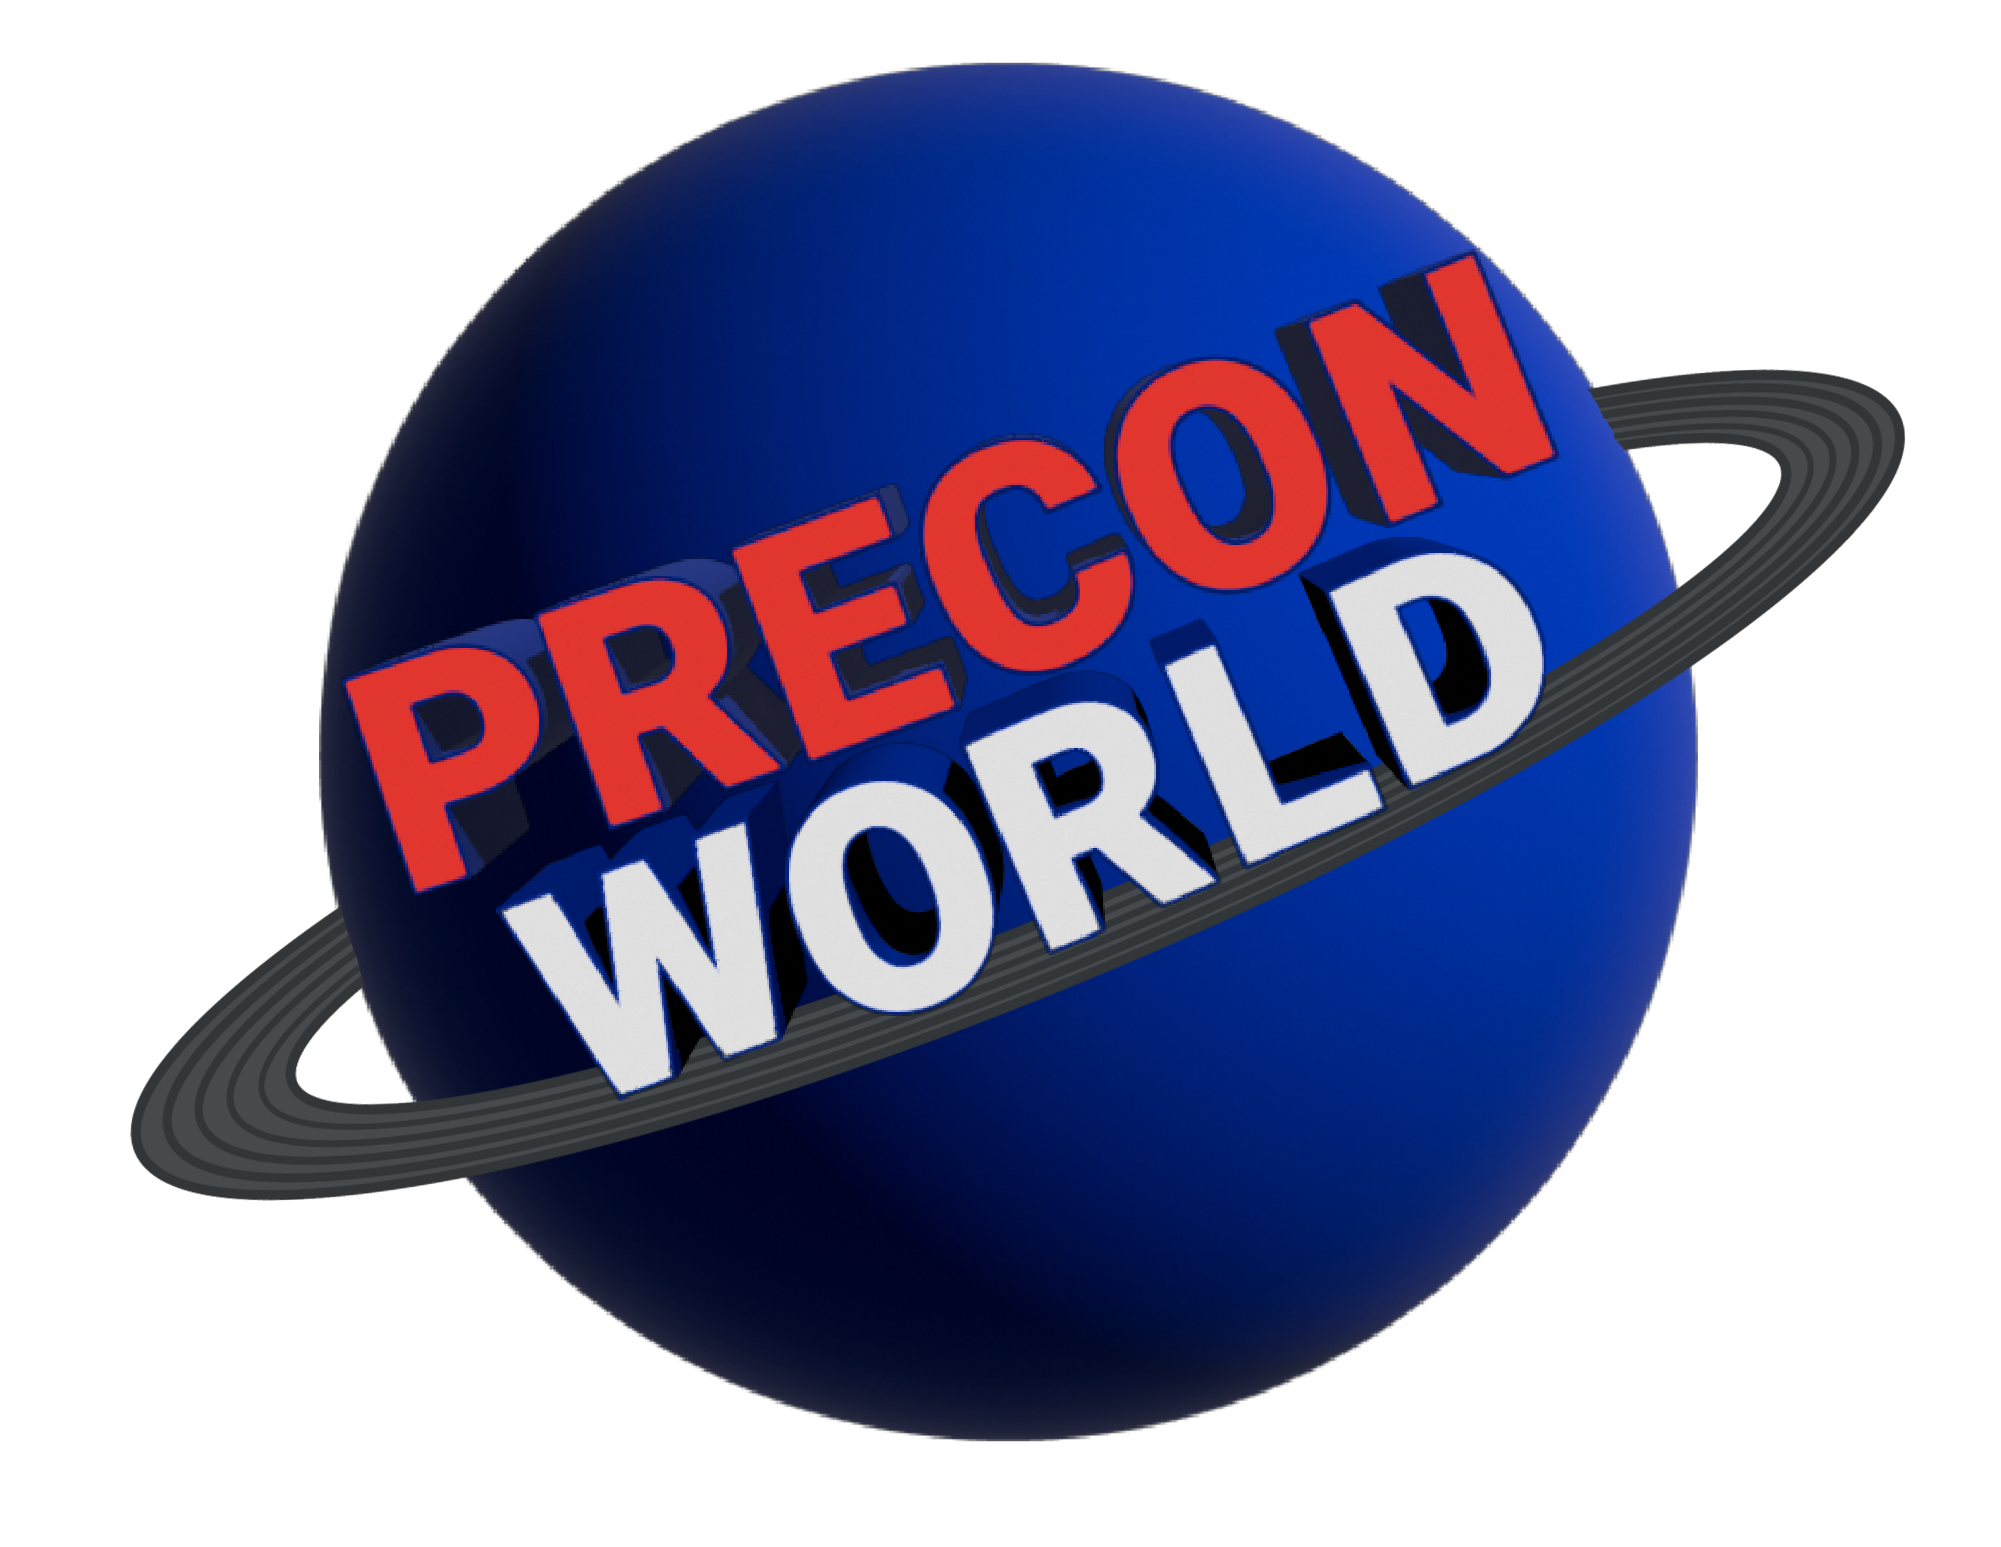 preconworldlogoround2b